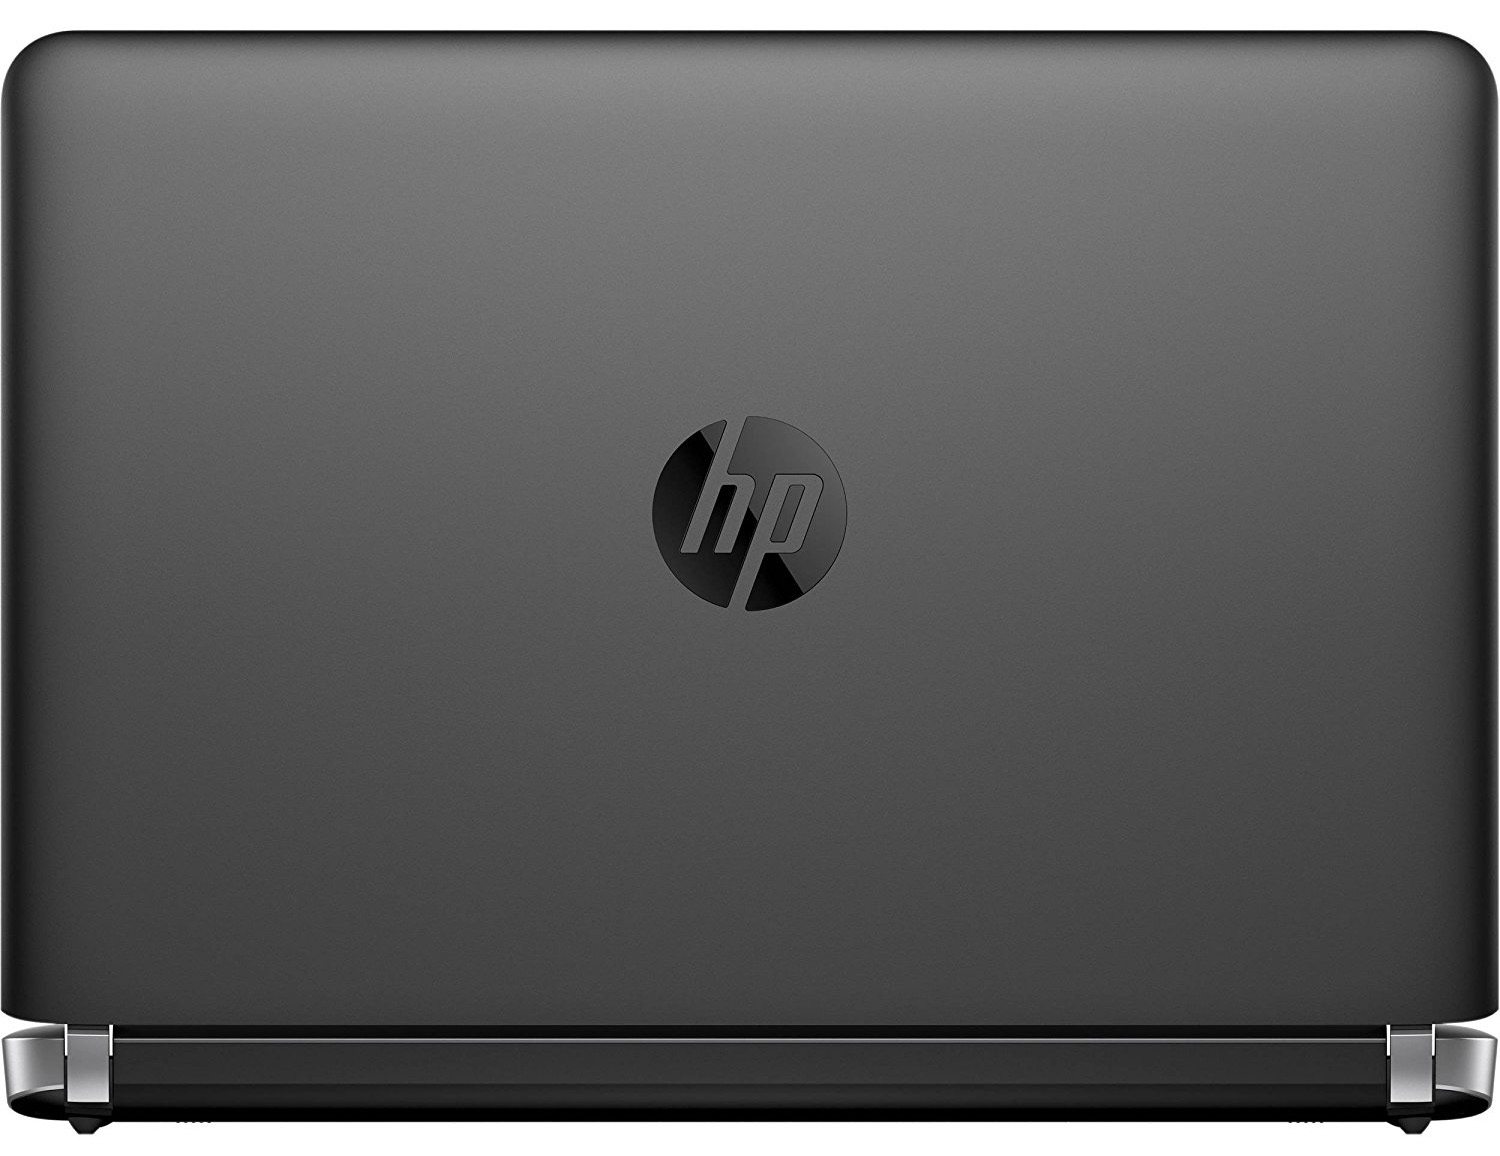 HP ProBook 430 G3 - Specs, Tests, and Prices | LaptopMedia.com